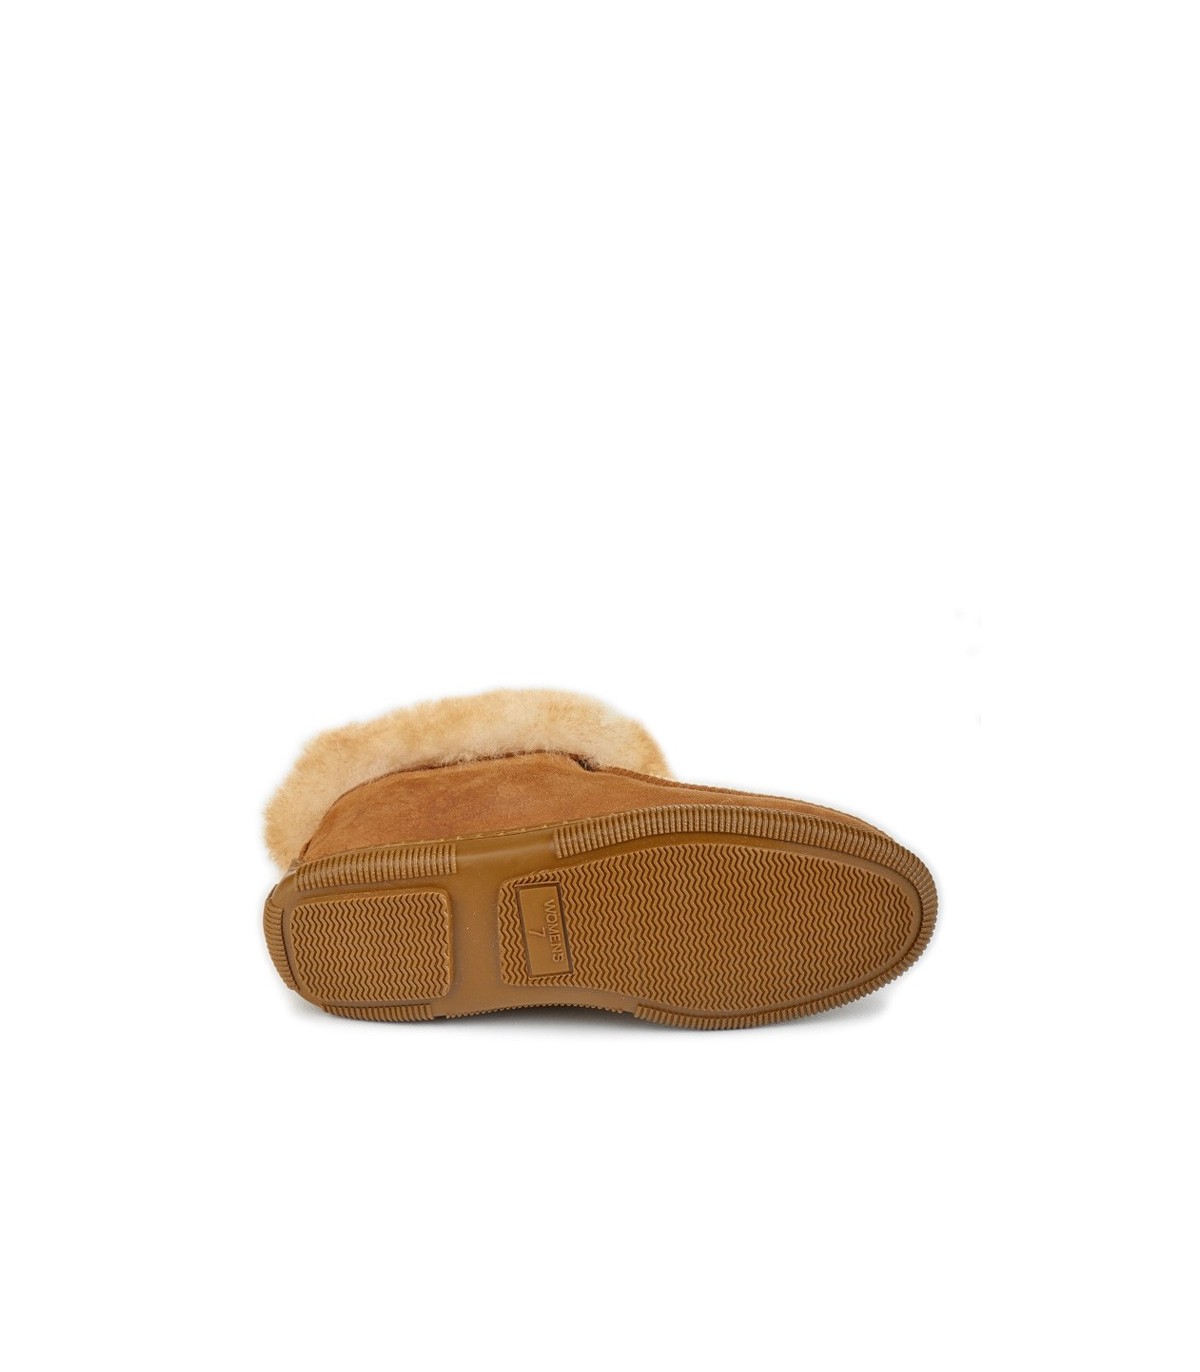 Handmade sheepskin slippers, soft sole - Karoo Baba